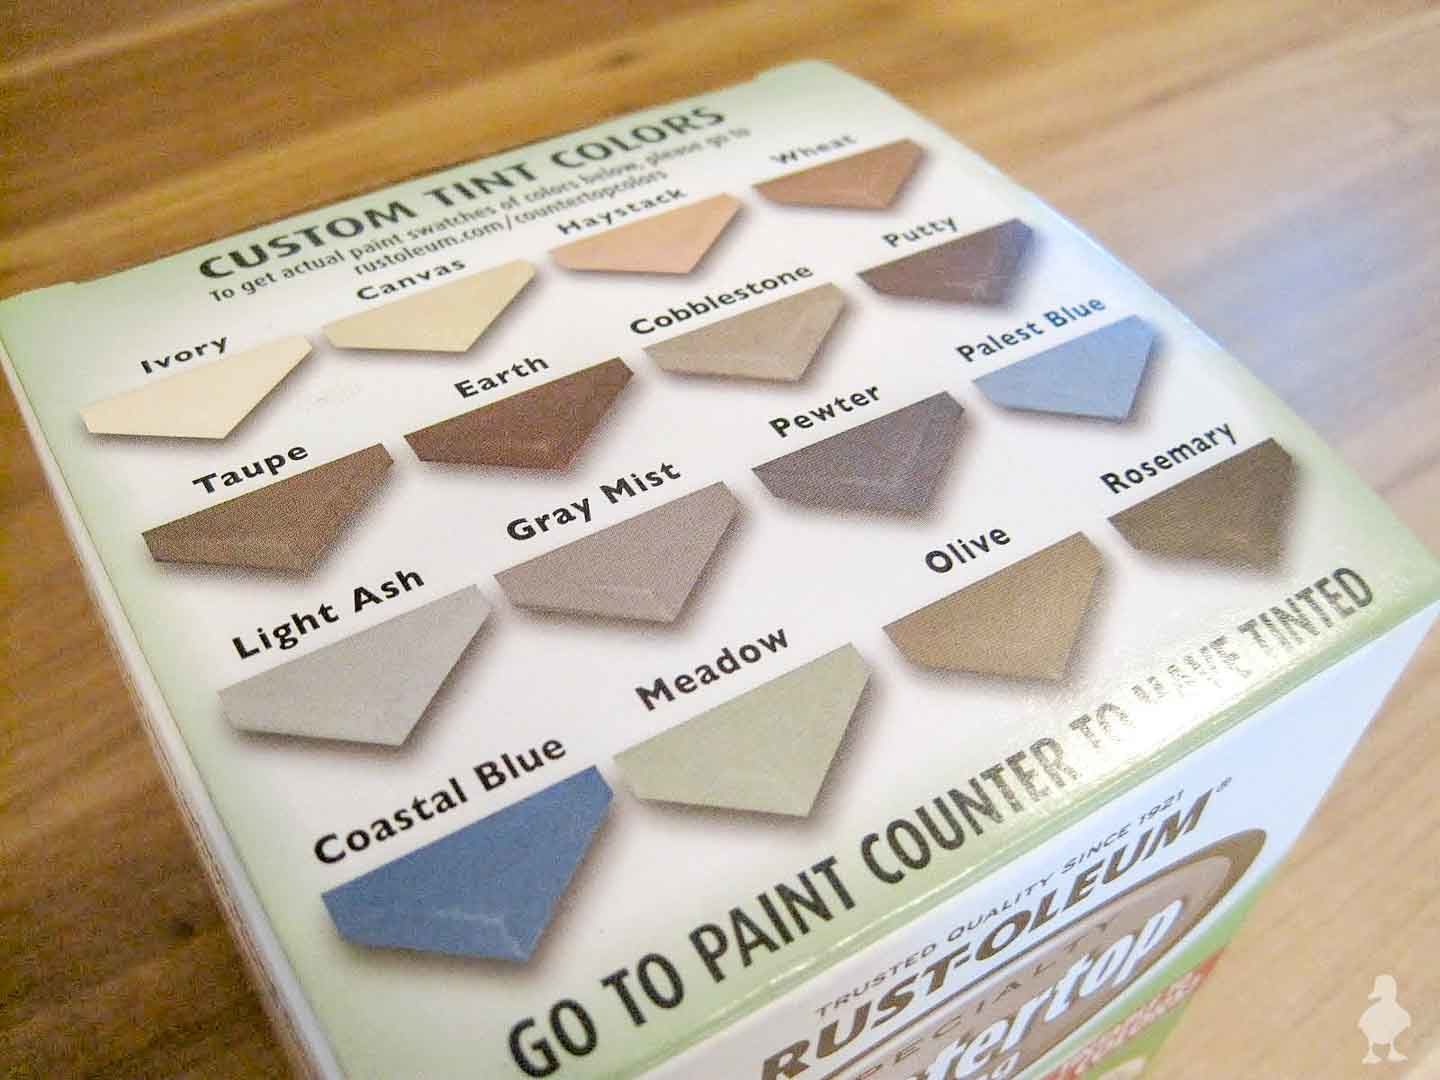 Rustoleum countertop coating color options - I painted my kitchen countertops